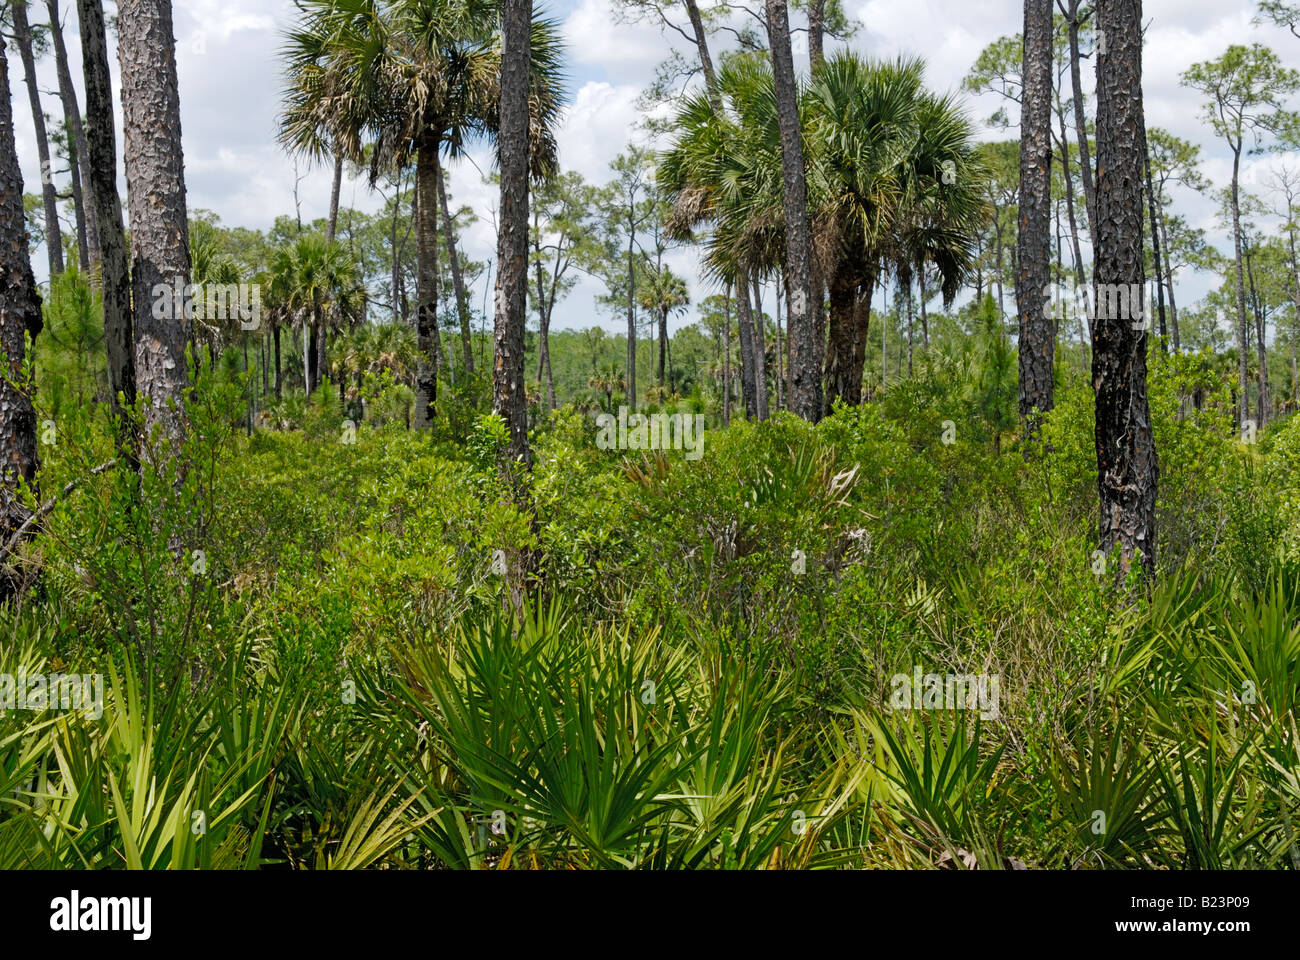 Pine Flatwood Ökosystem im südlichen Florida Corkscrew Swamp Audubon Sanctuary Stockfoto